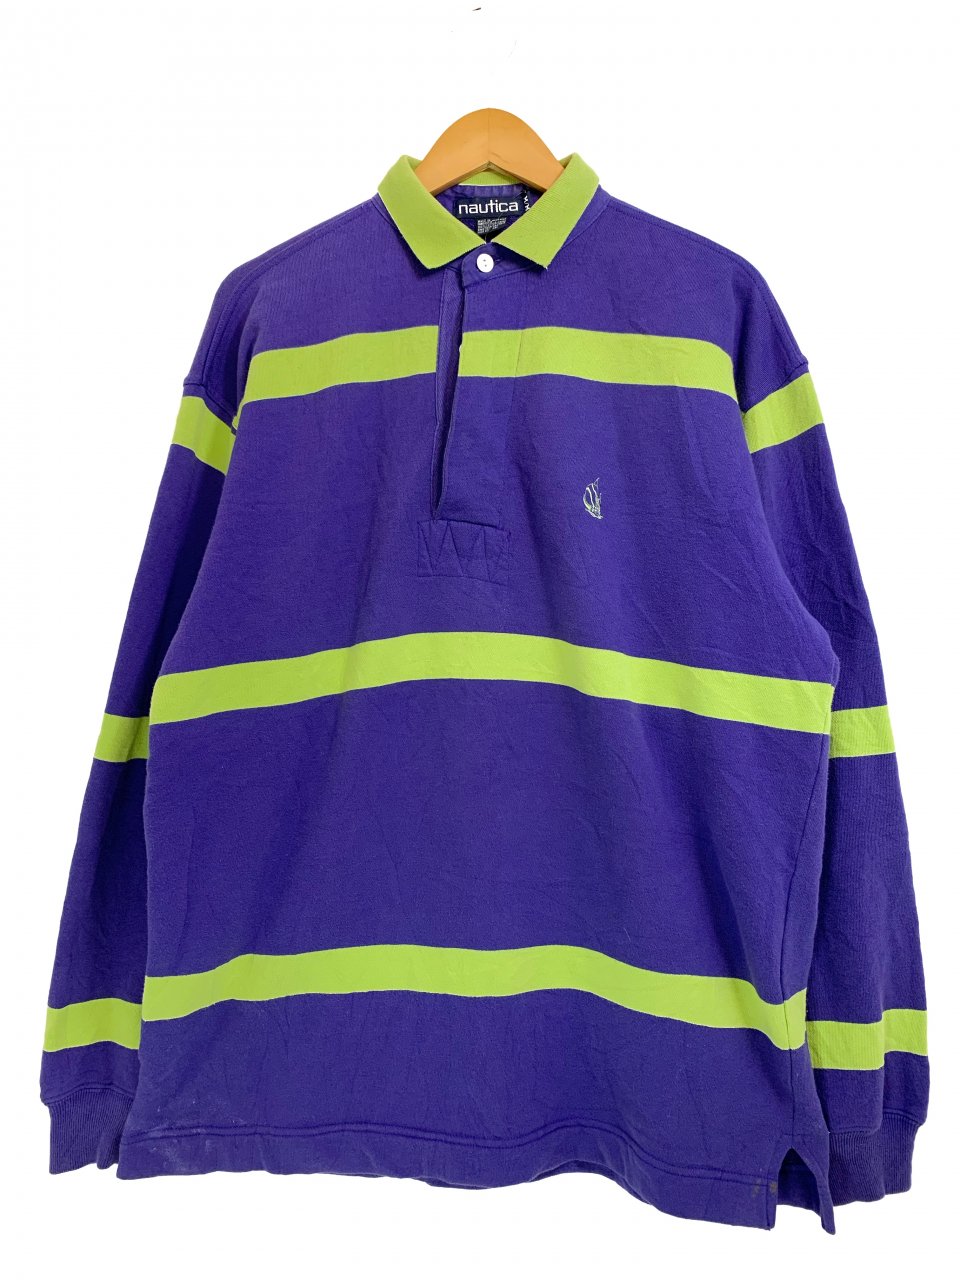 90s NAUTICA Border Sweat Rugger Shirt 紫黄緑 M ノーティカ 長袖